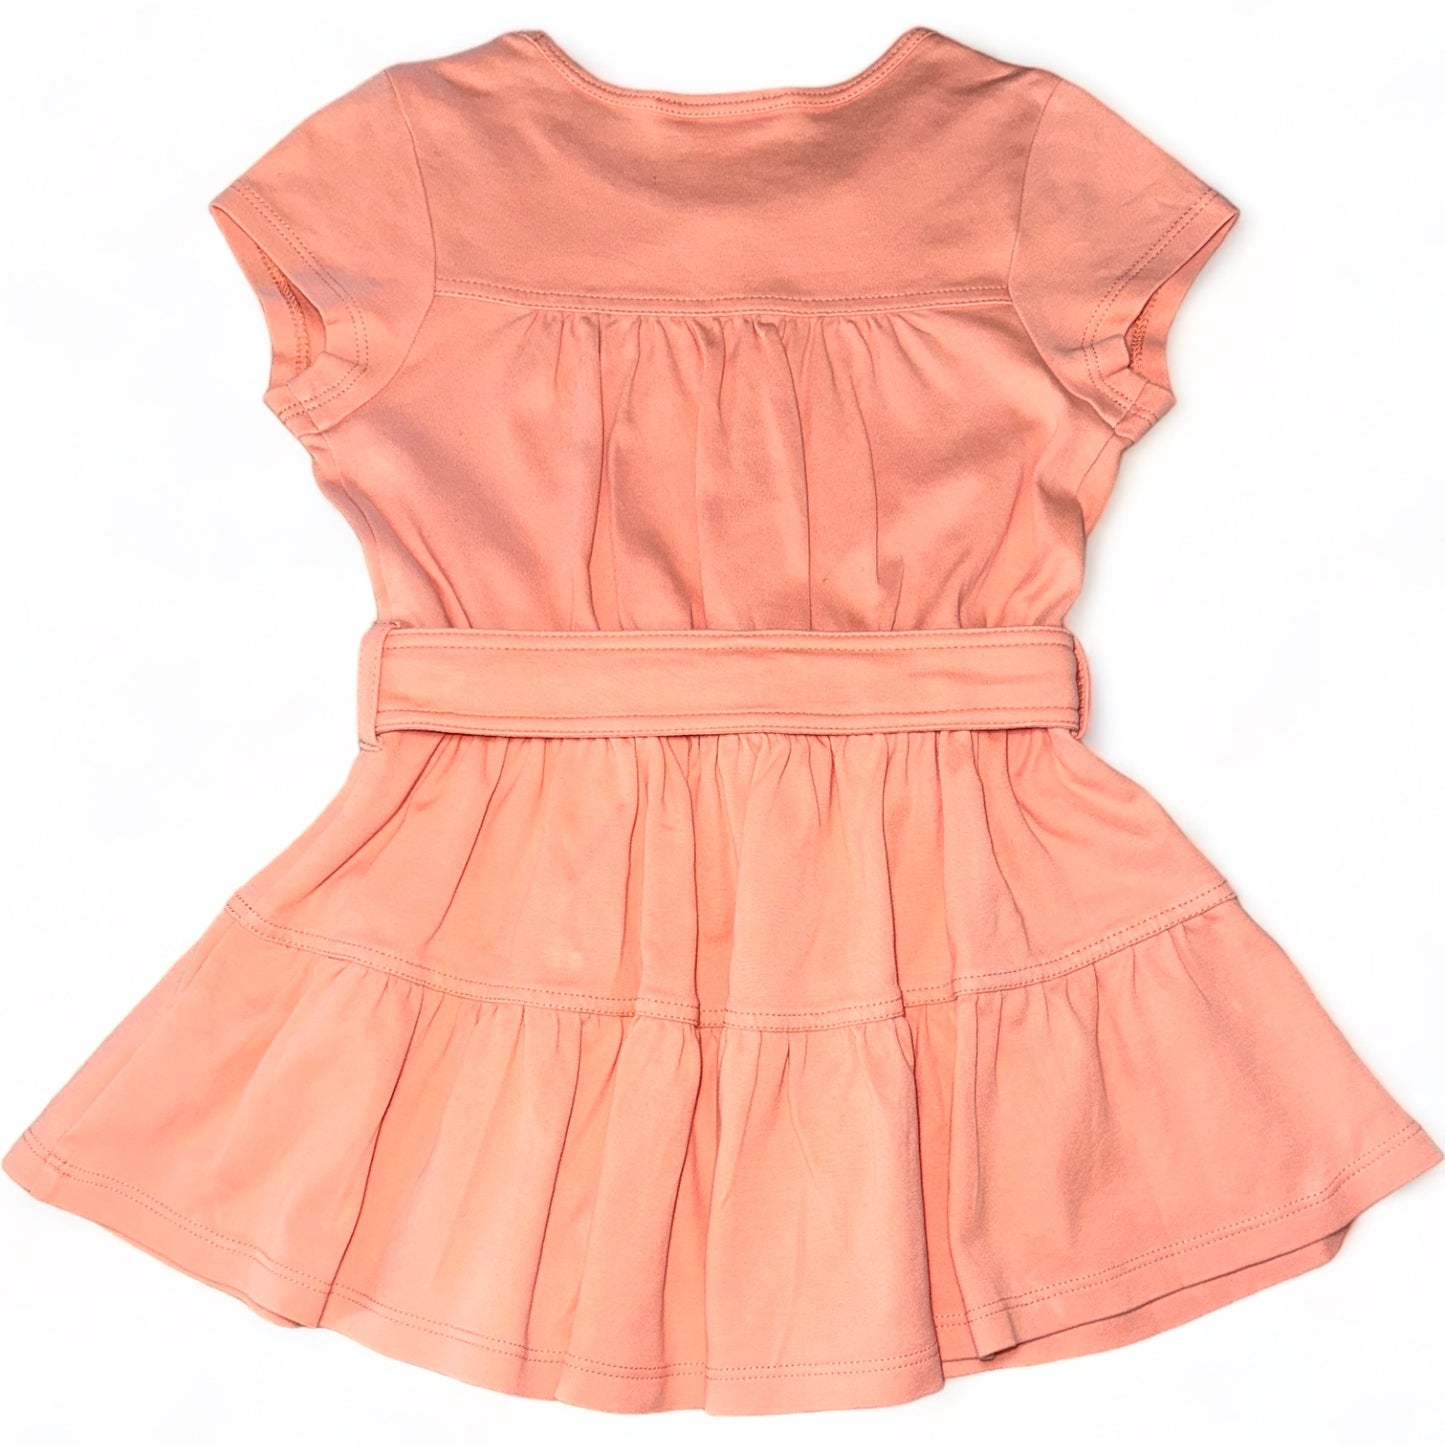 Chloe Cotton Pink Dress w/ Belt